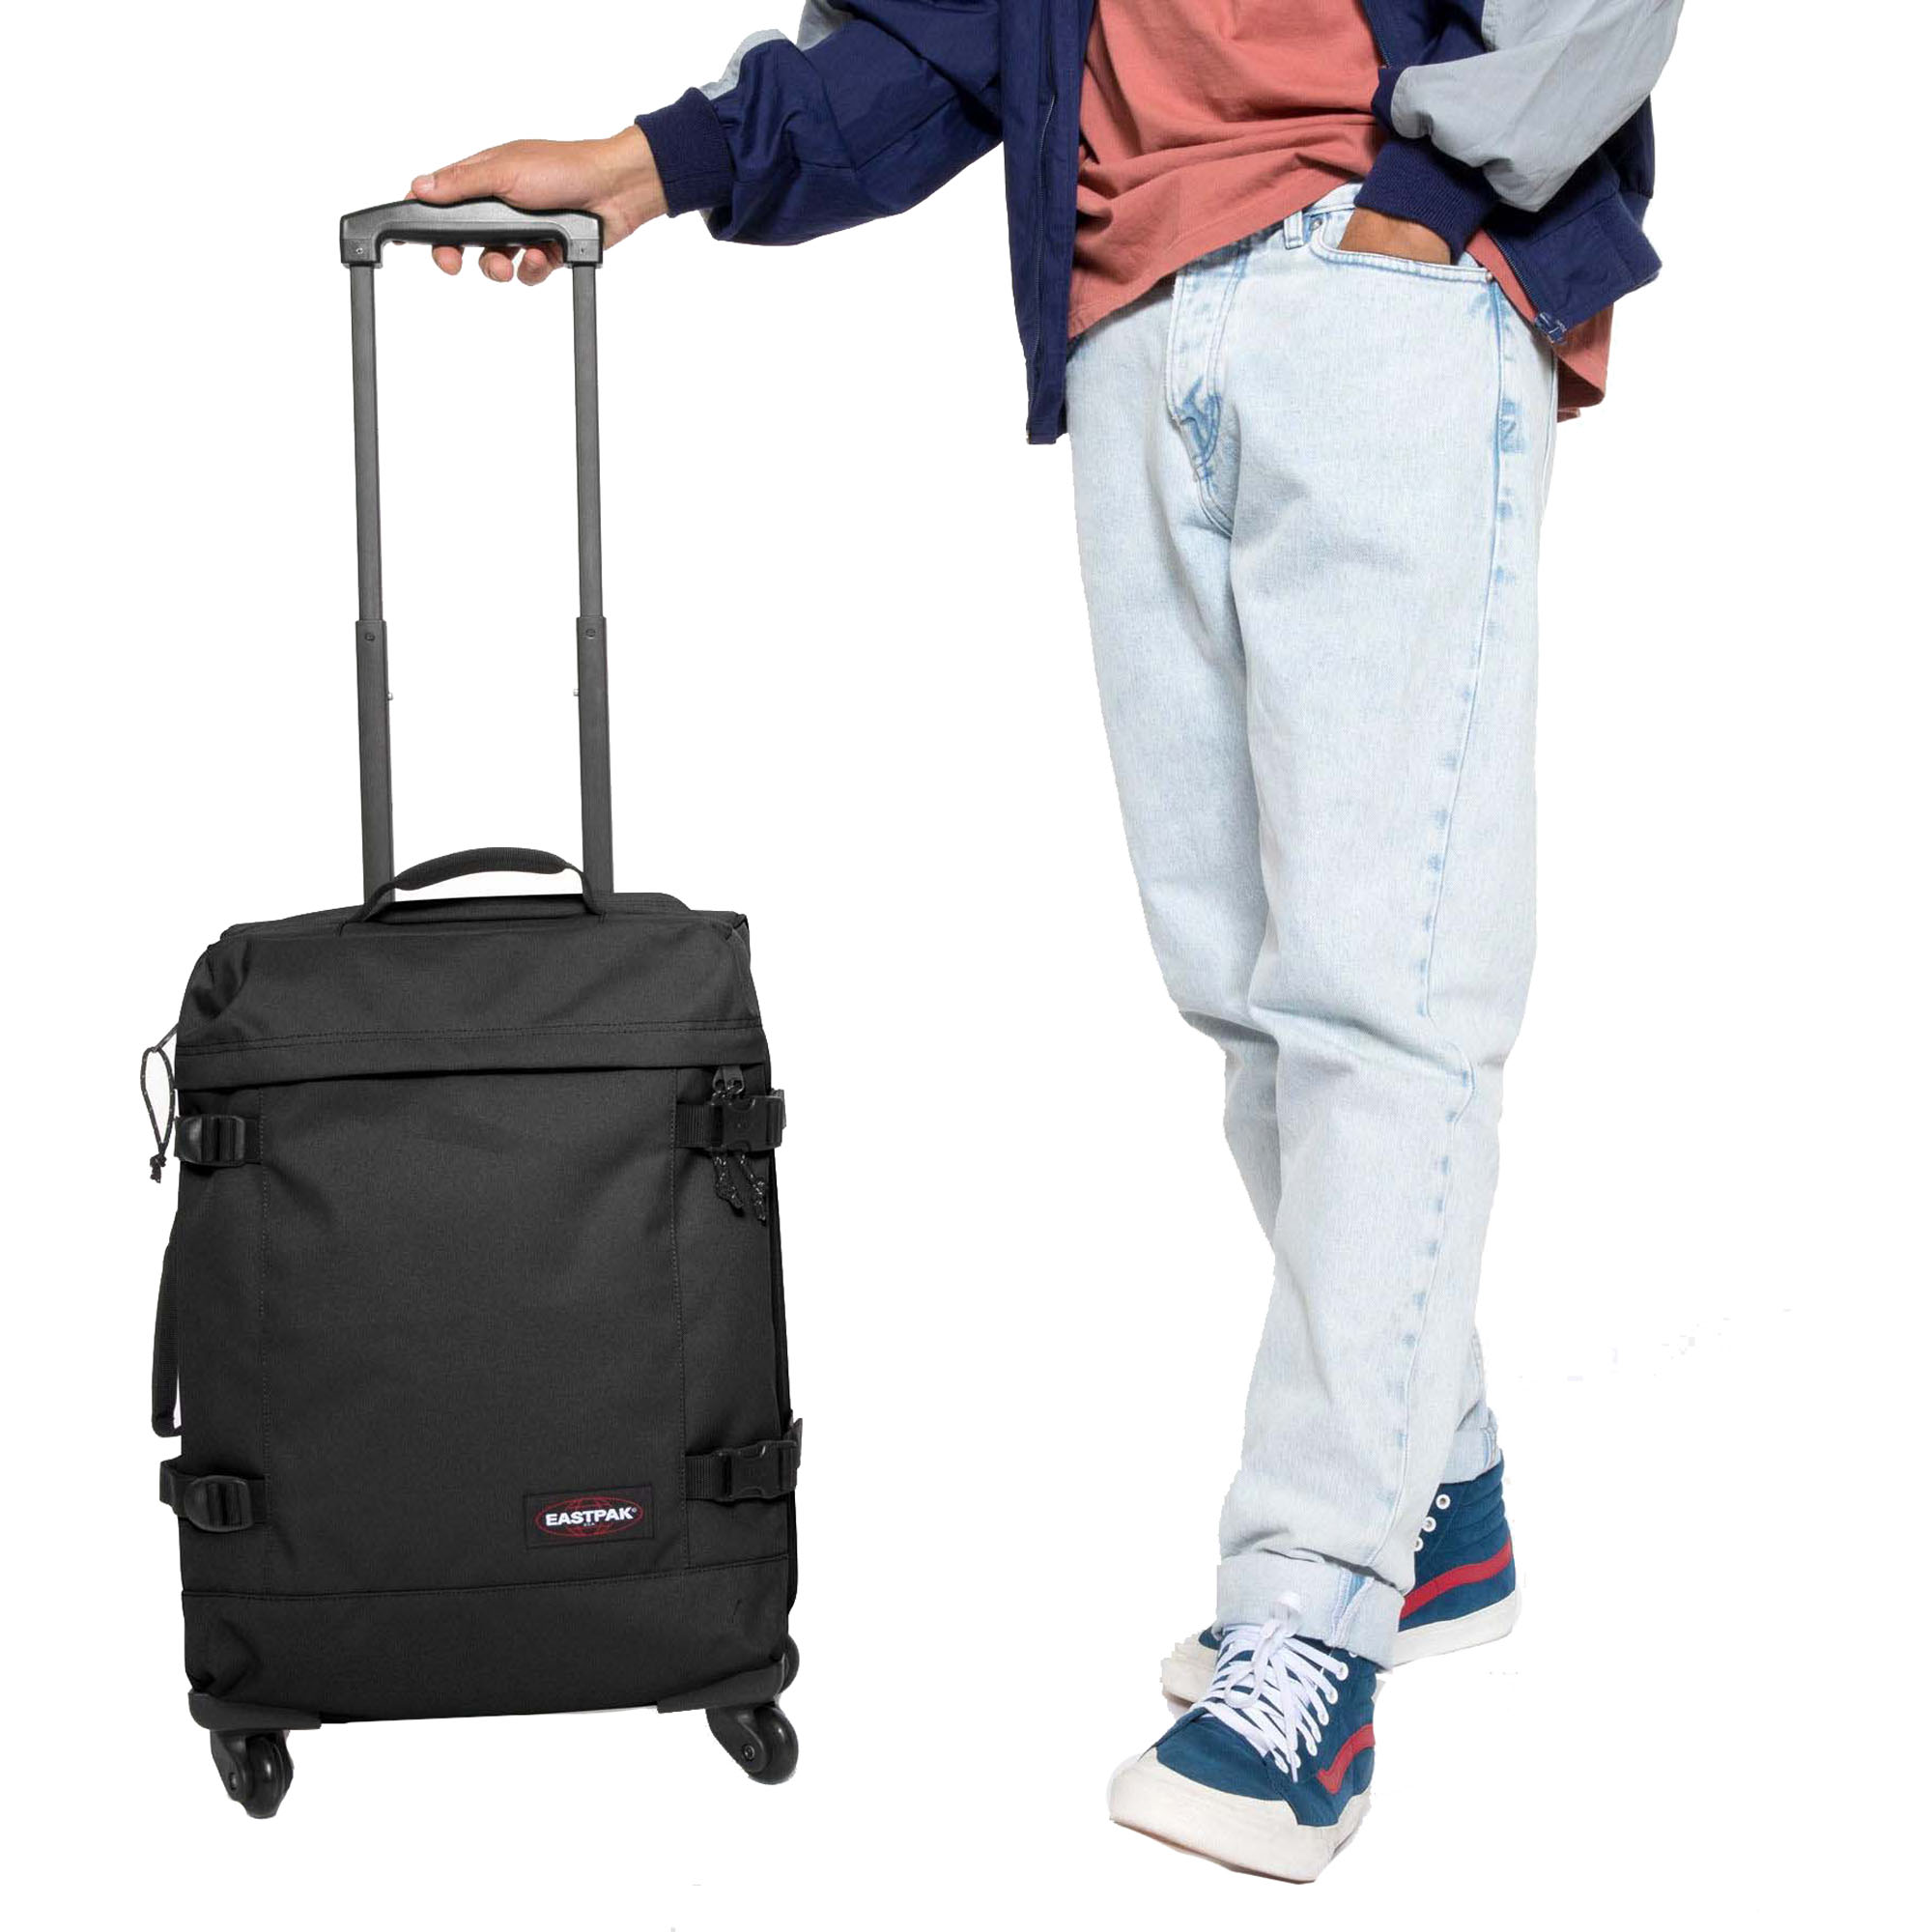 Eastpak Trans4 S 44 Wheeled Bag/Suitcase